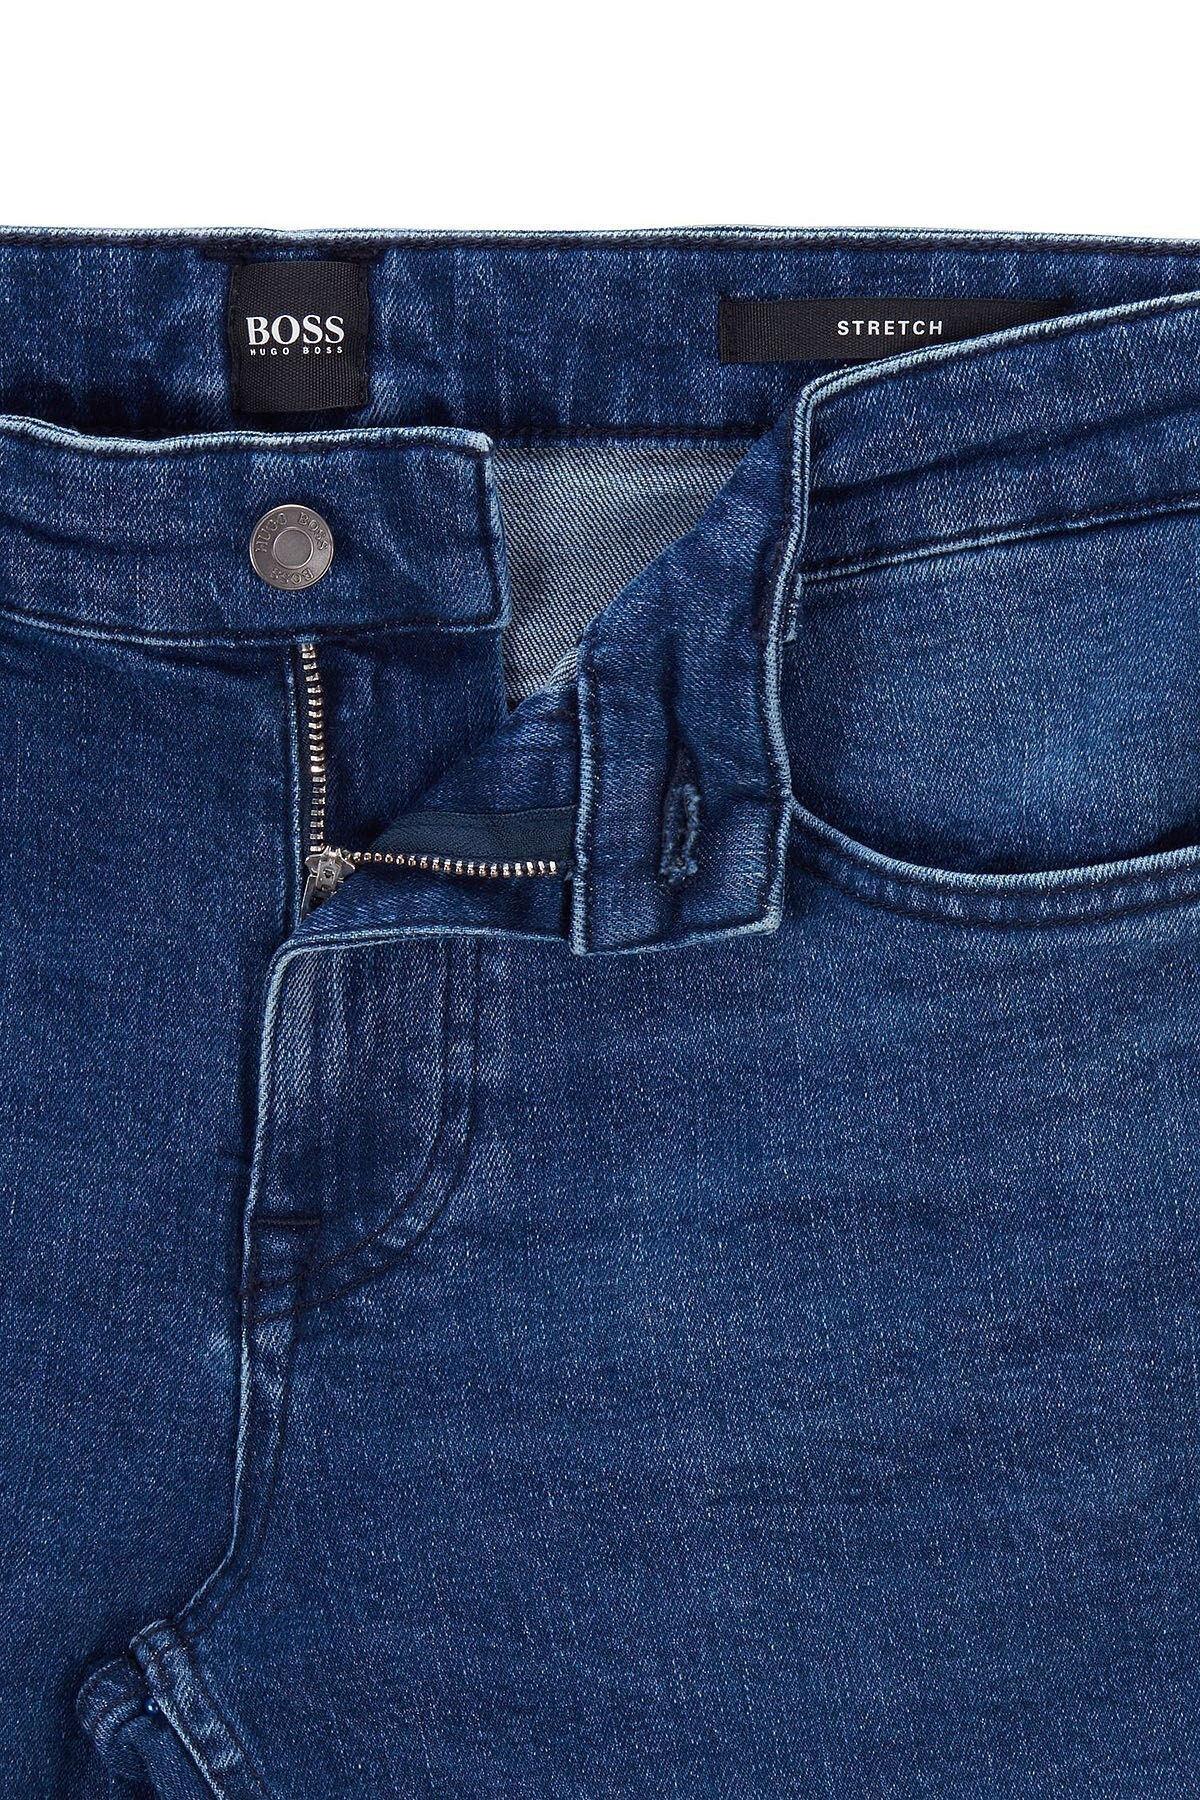 Hugo Boss Pamuklu Düşük Bel Extra Slim Fit Jeans Erkek Kot Pantolon 50443976 415 LACİVERT